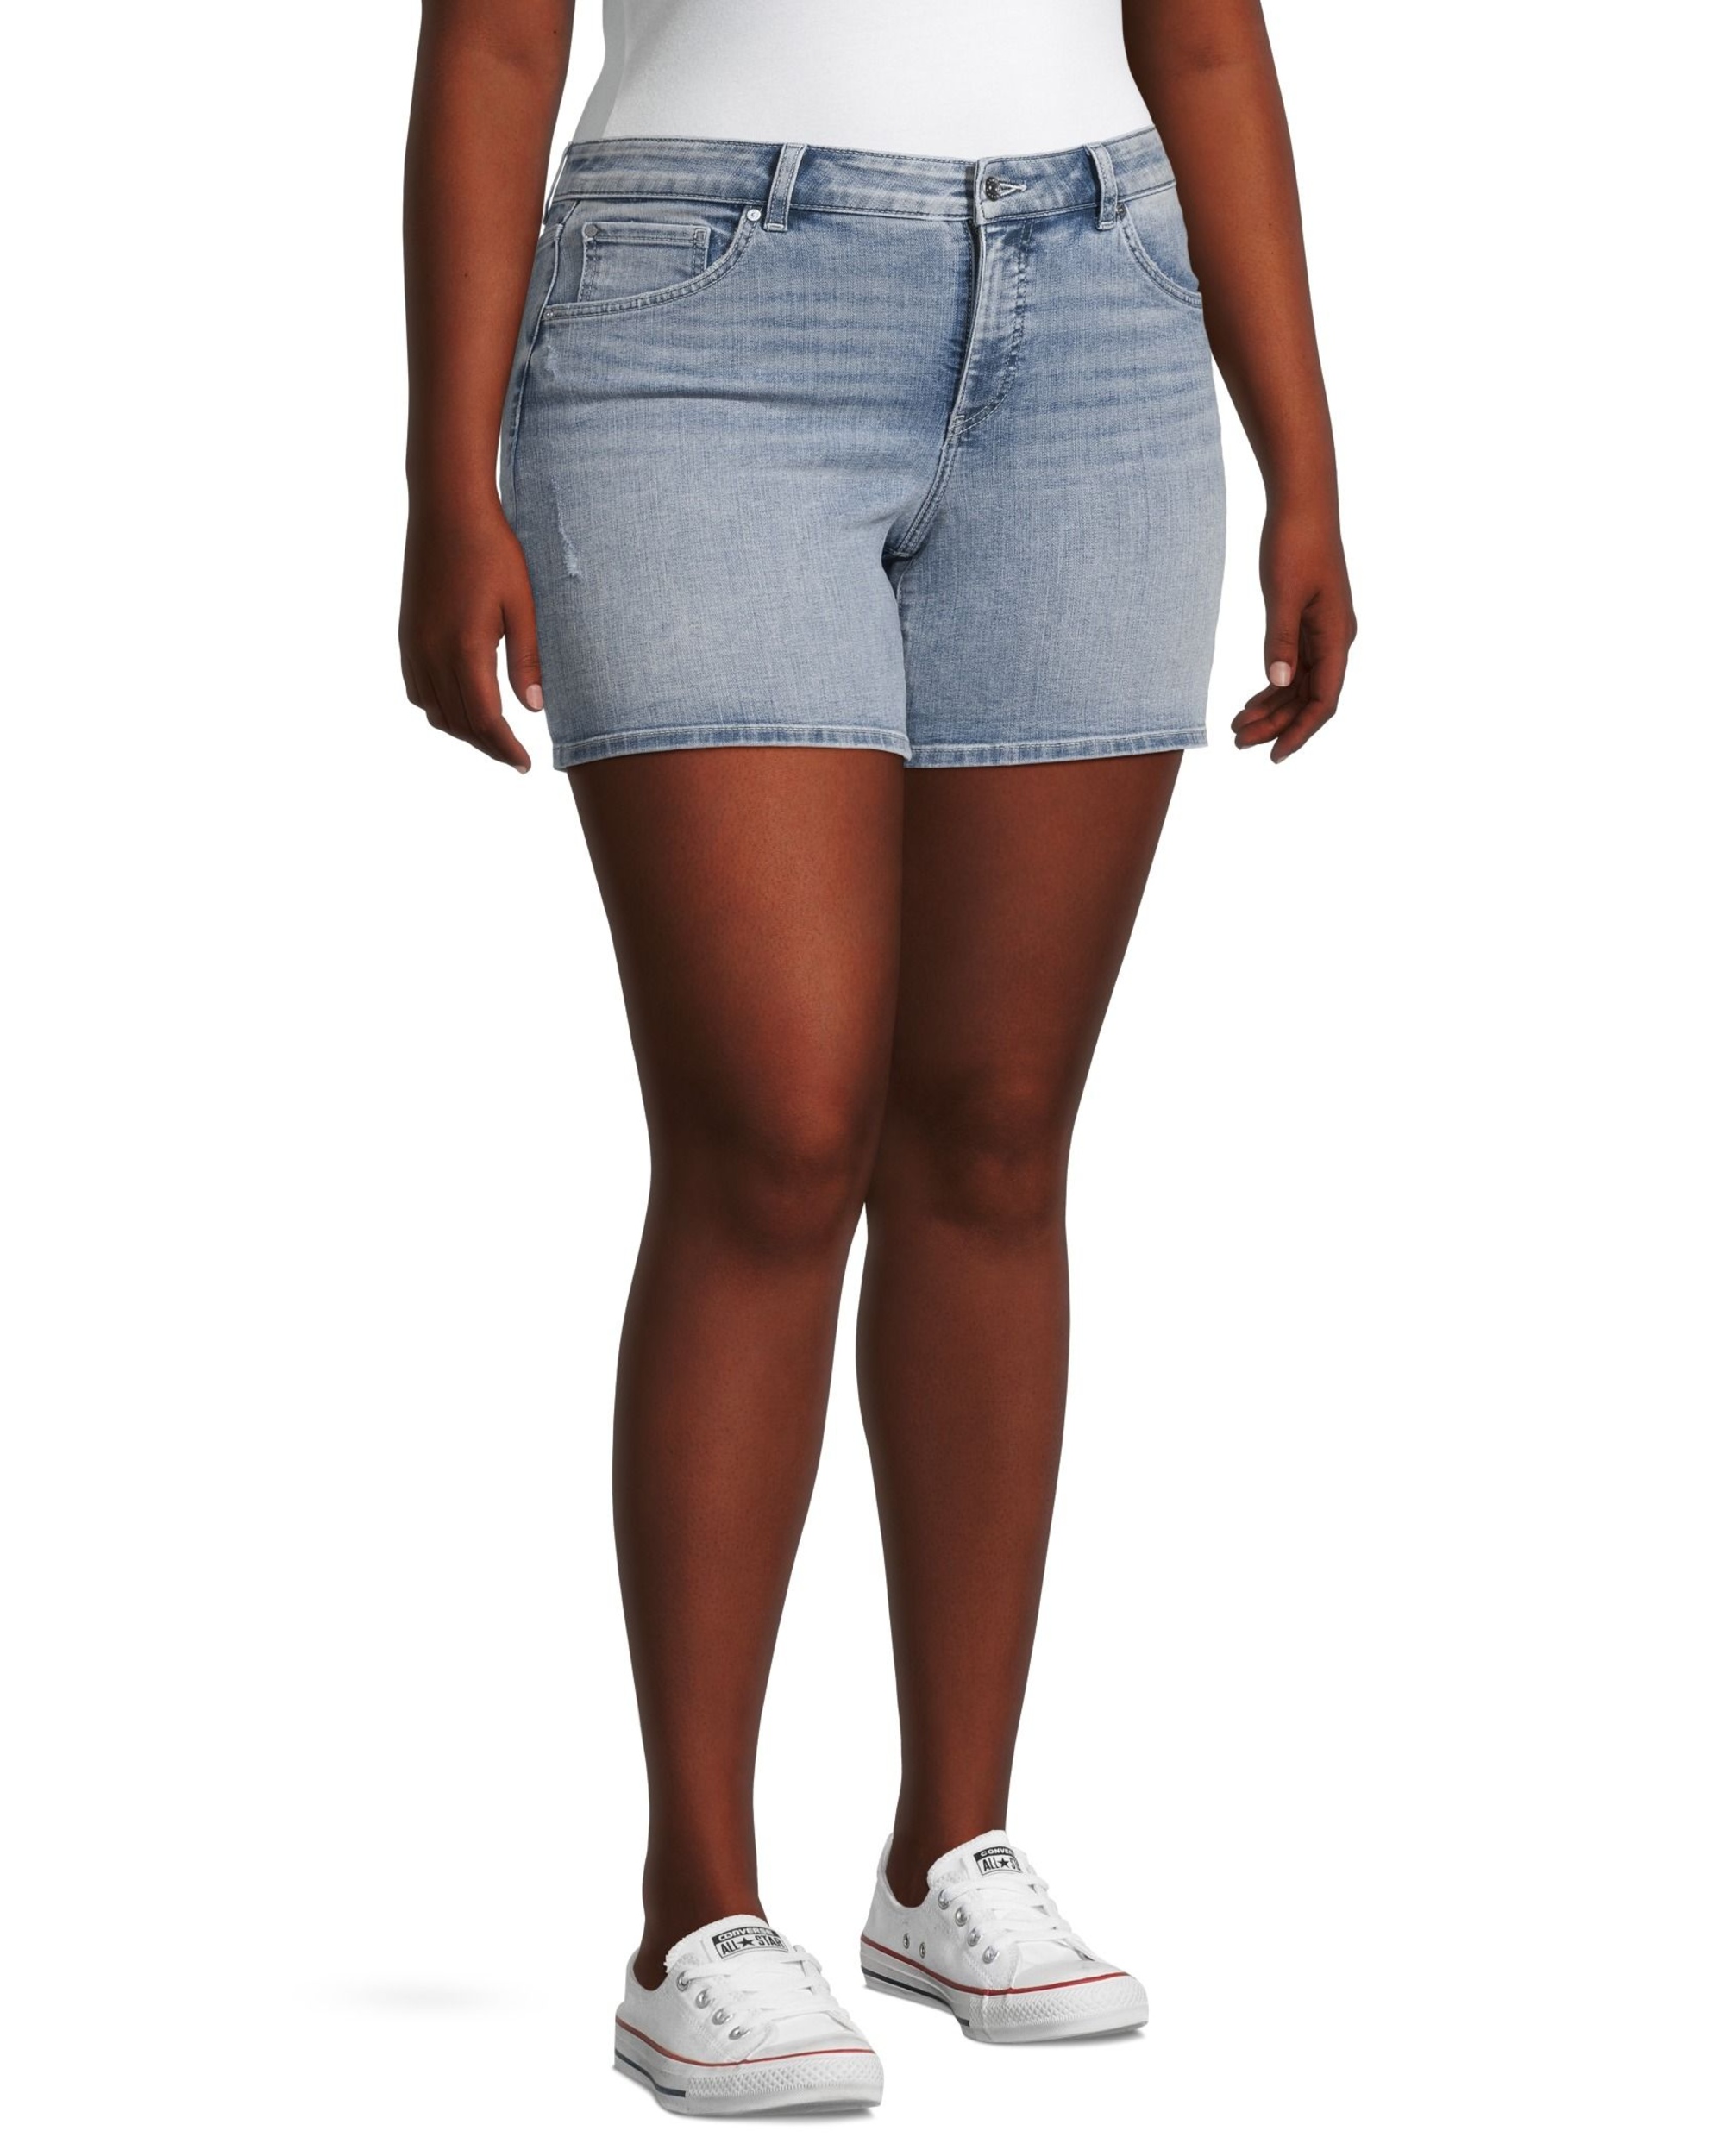 Denver Hayes Women's Curvy Fit Jean Shorts | Marks